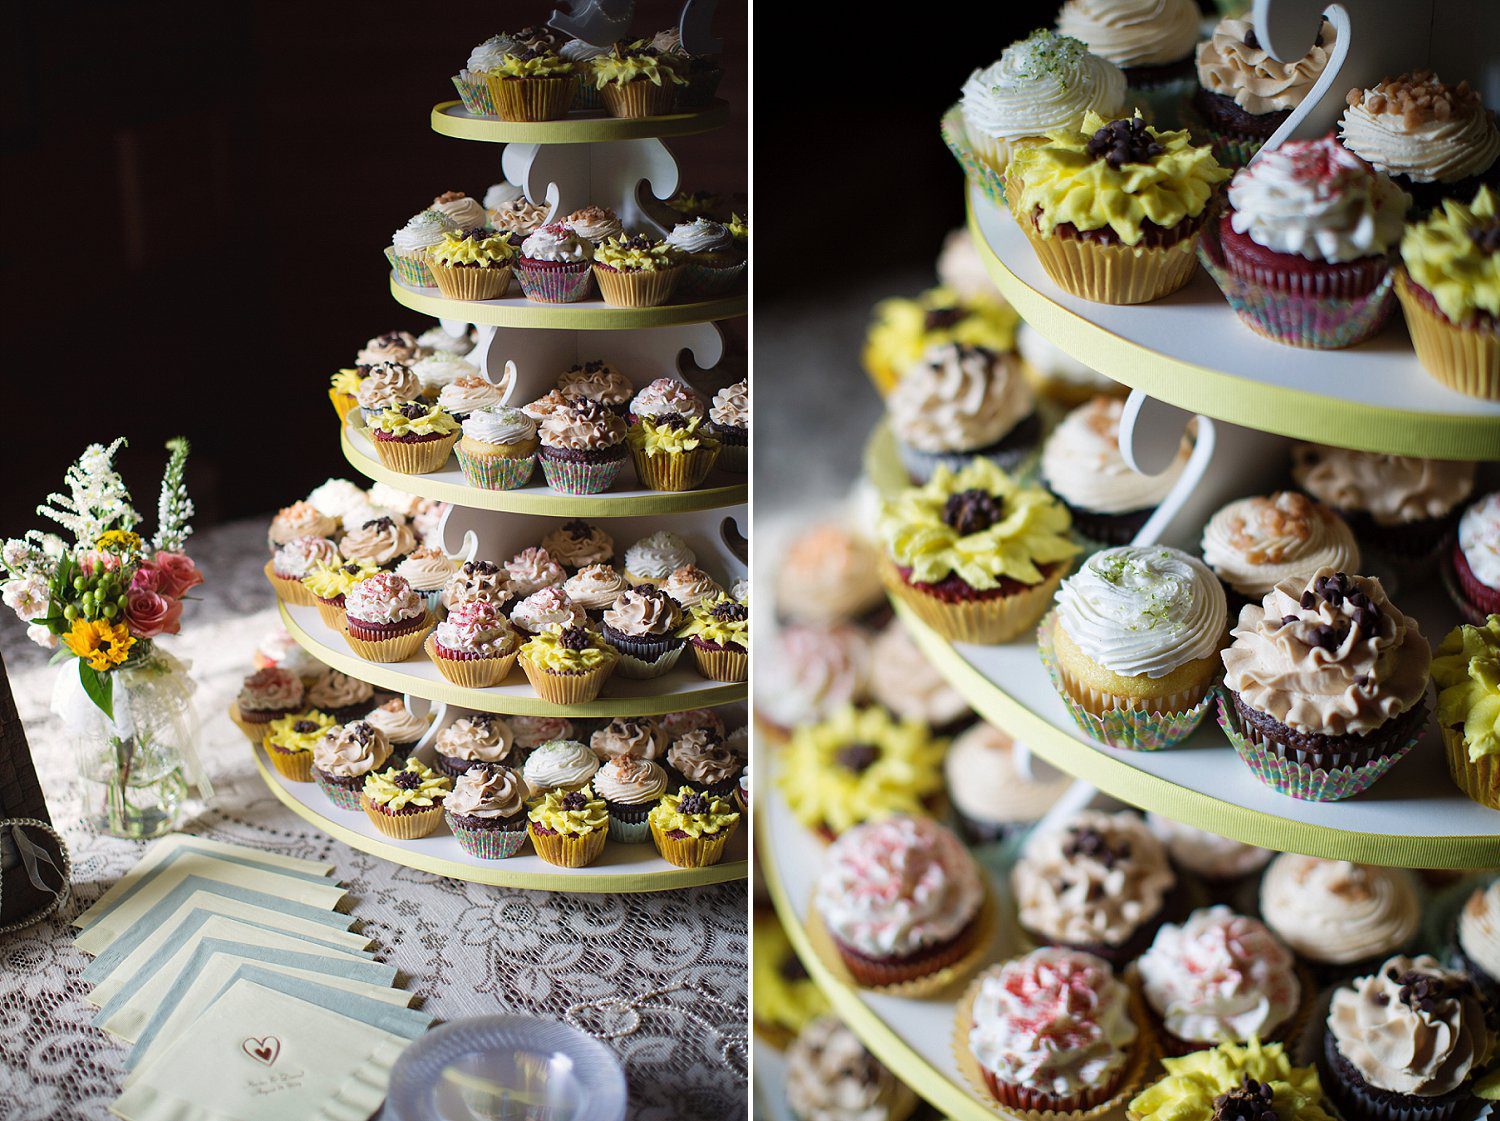 wedding cupcakes by flour! wells maine laudholm farm